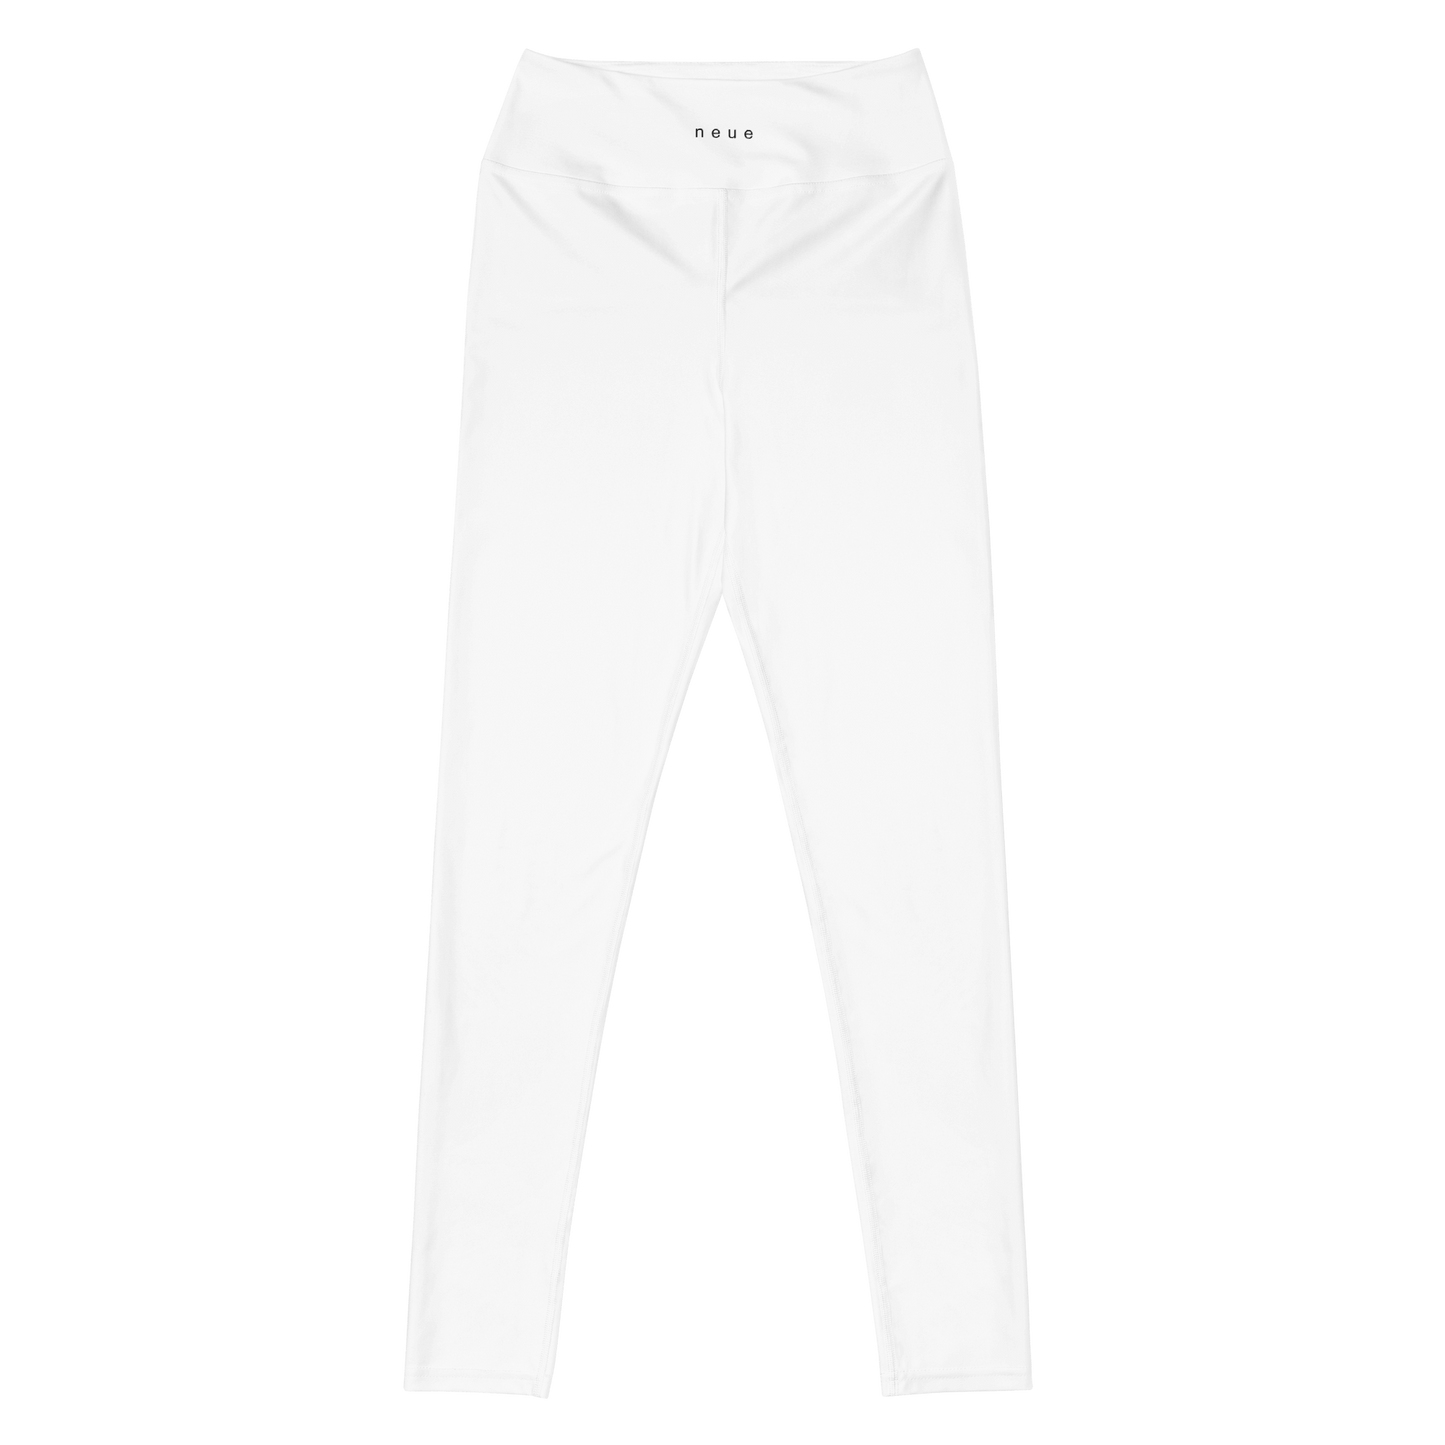 Align Leggings in White